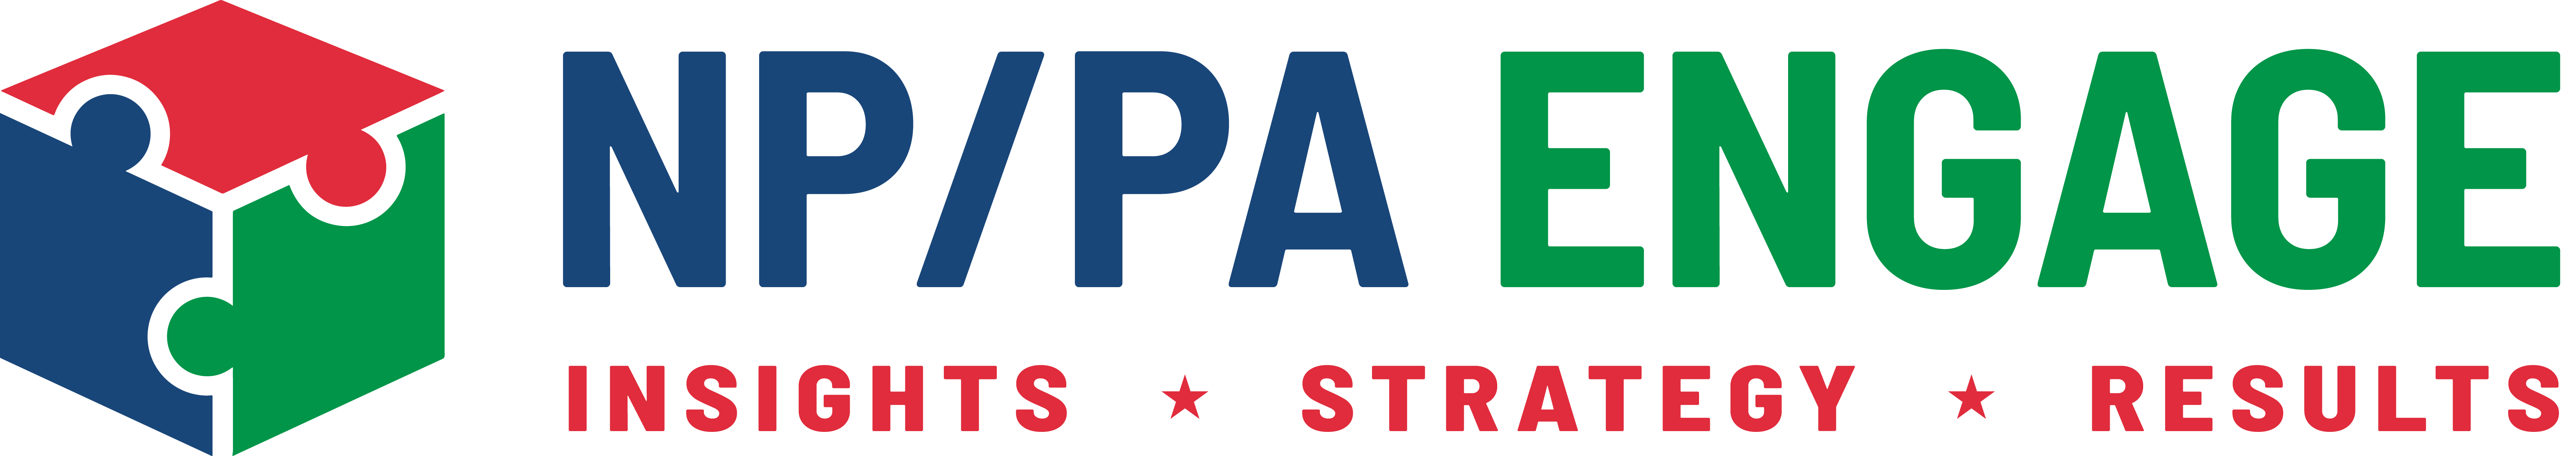 NP/PA Engage-logo